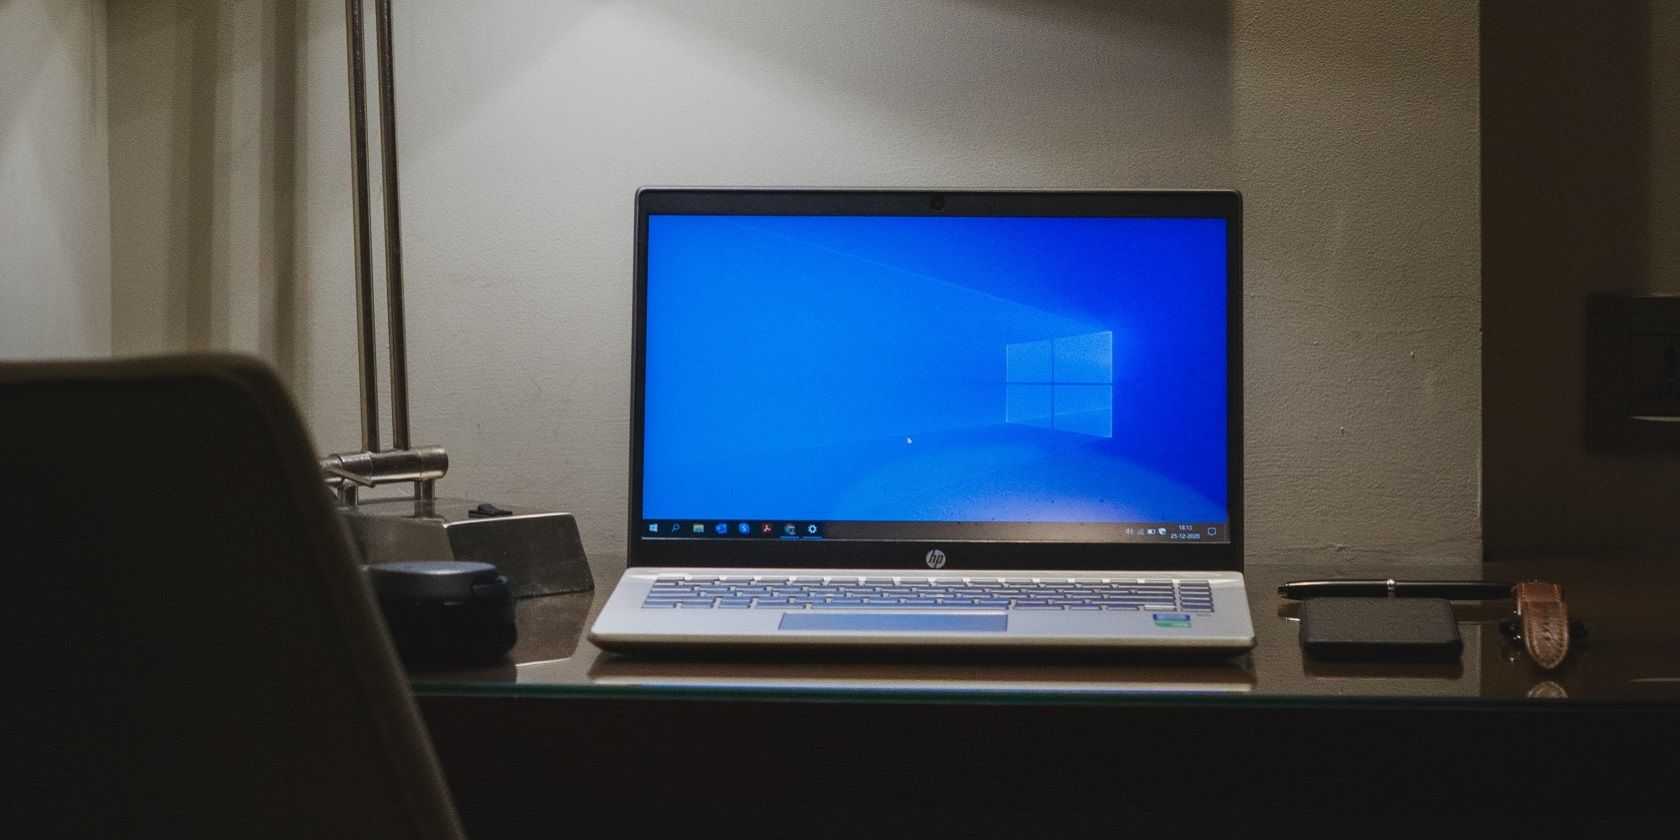 Windows 10 PC with a clean desktop